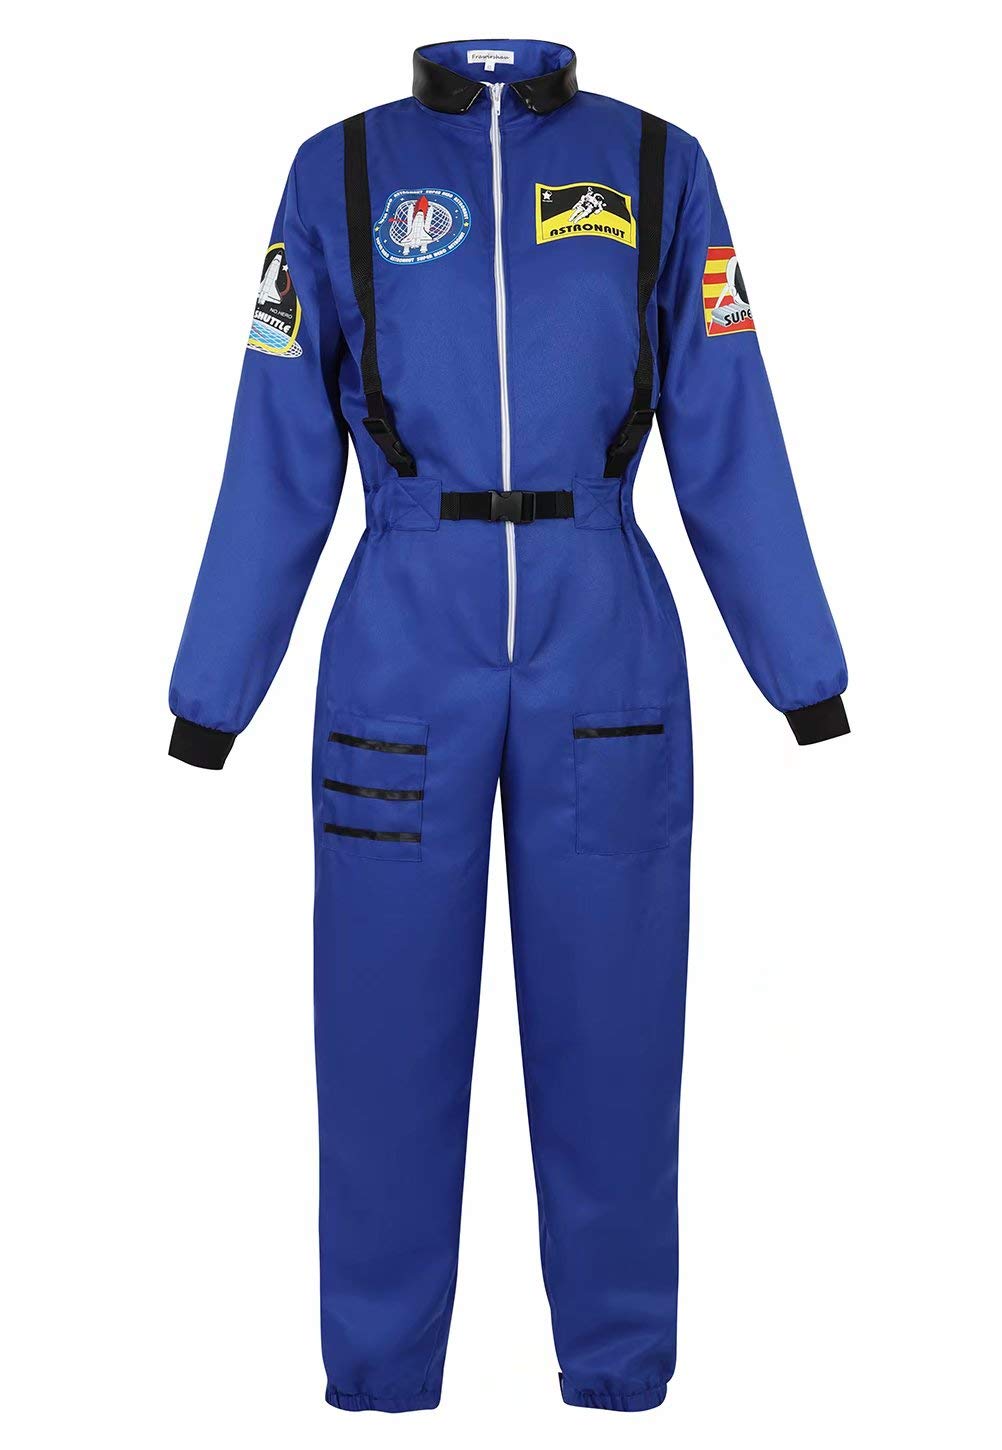 Josamogre Astronauten Kostüm Erwachsene Damen Kostüm Astronau Anzugt Weltraum Raumfahrer Cosplay Halloween Blau L